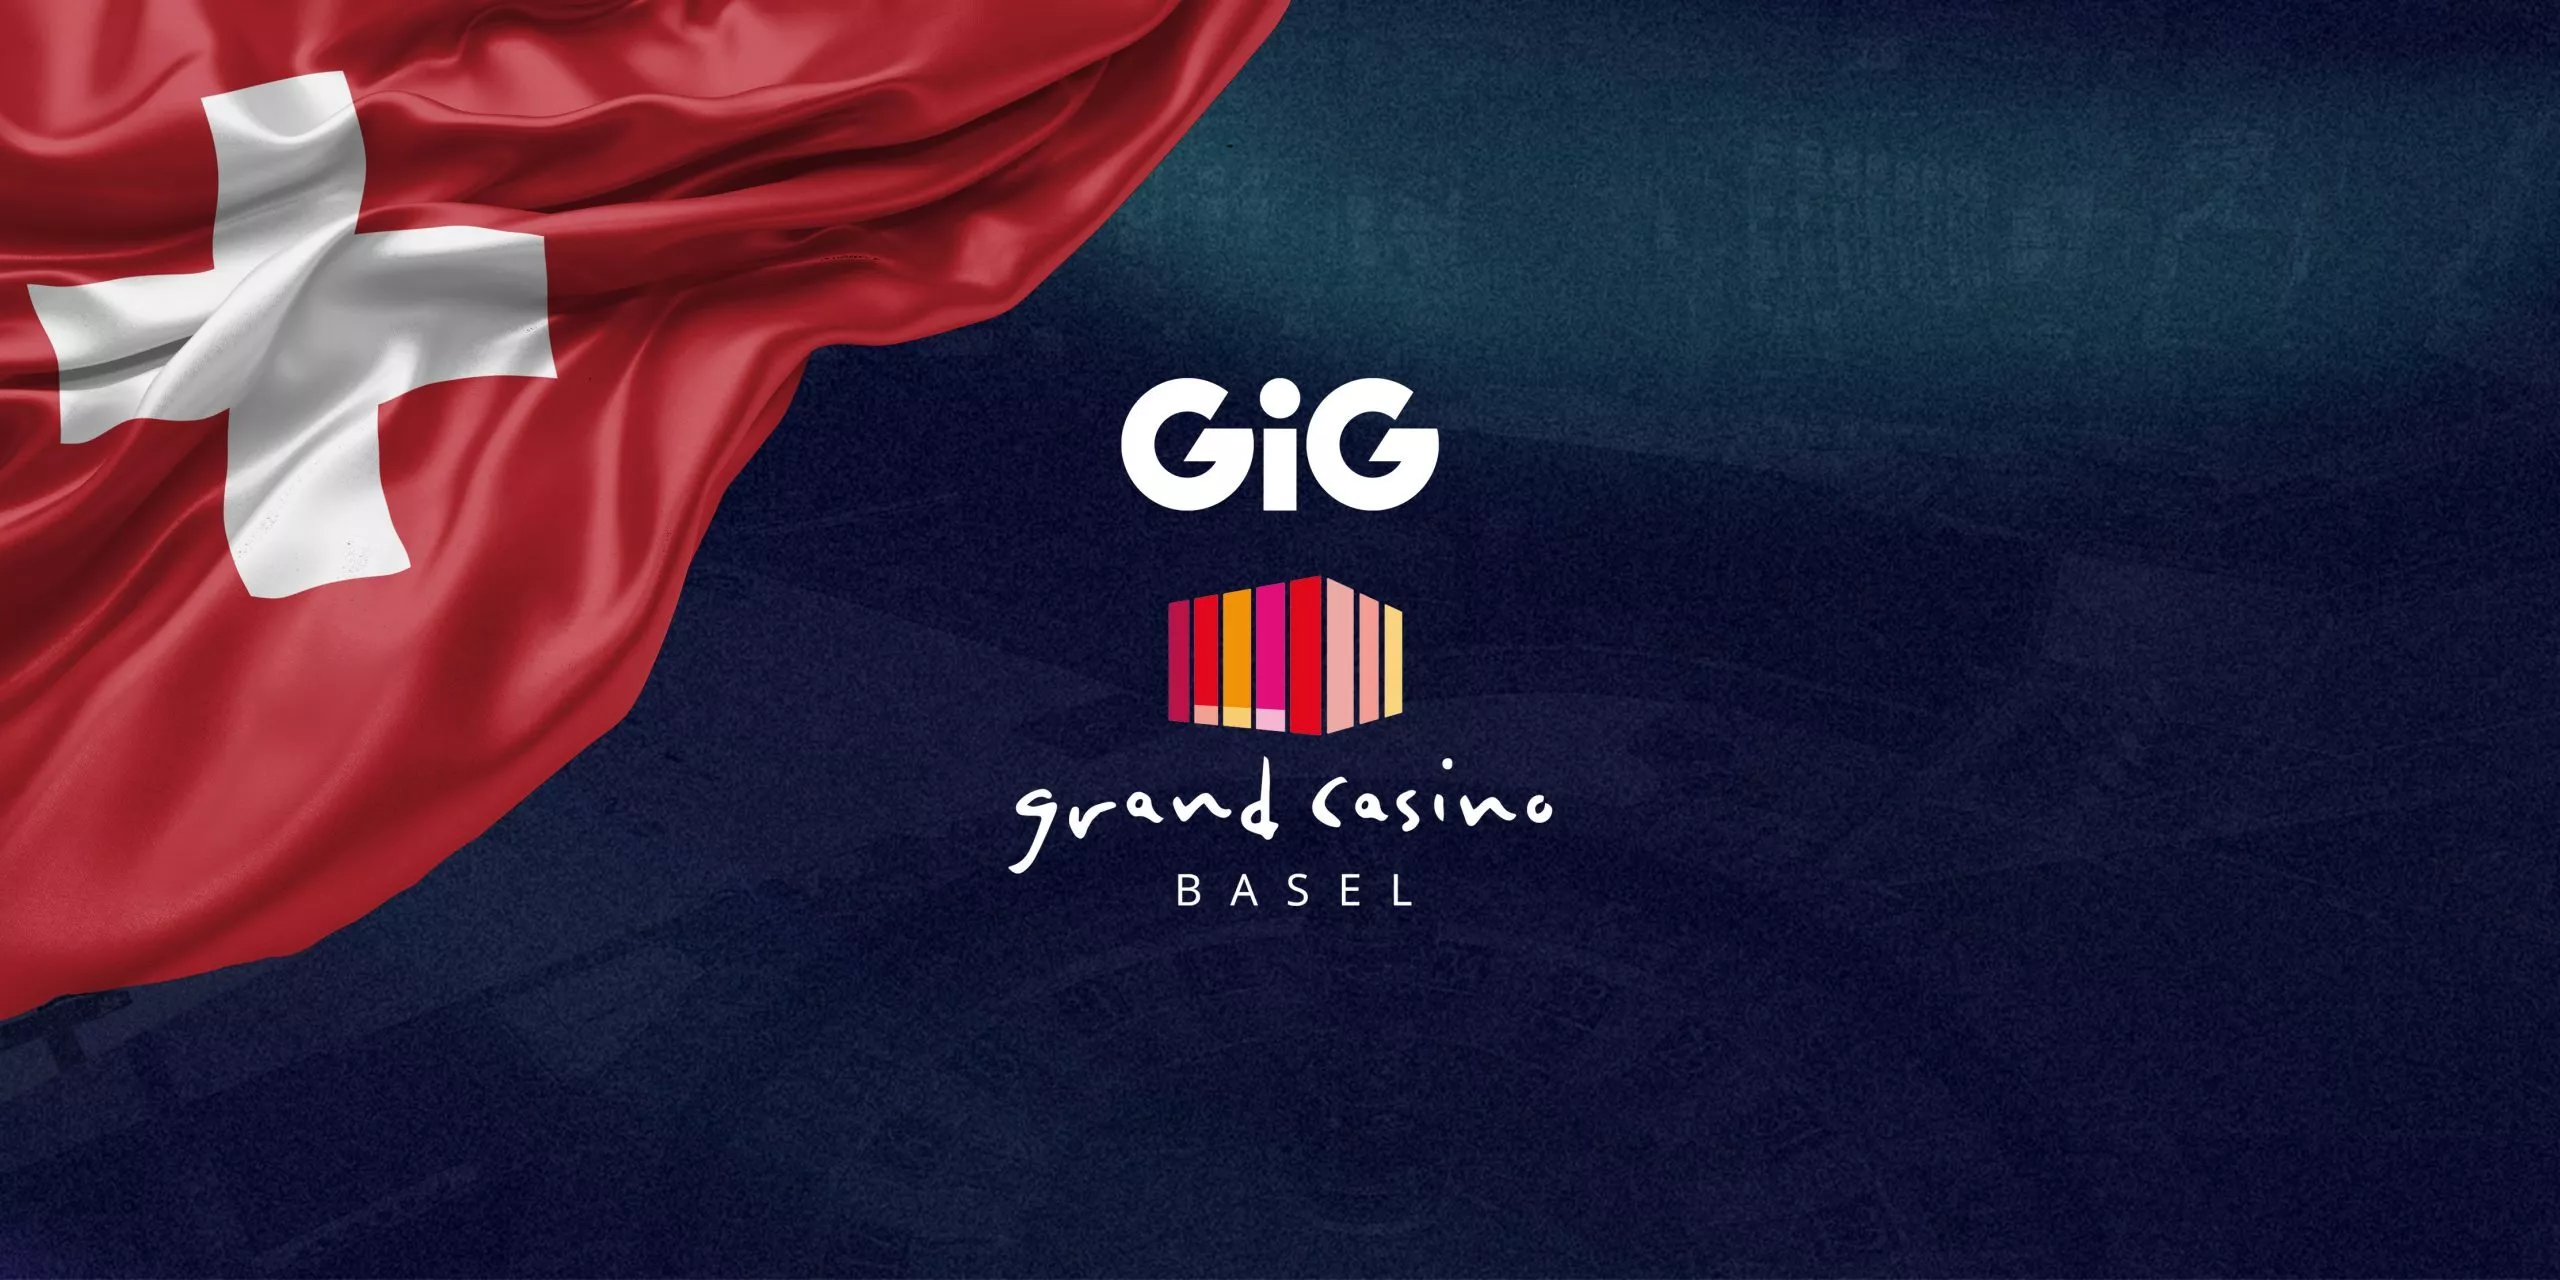 gig-grand-casino-basel-logos-partnership